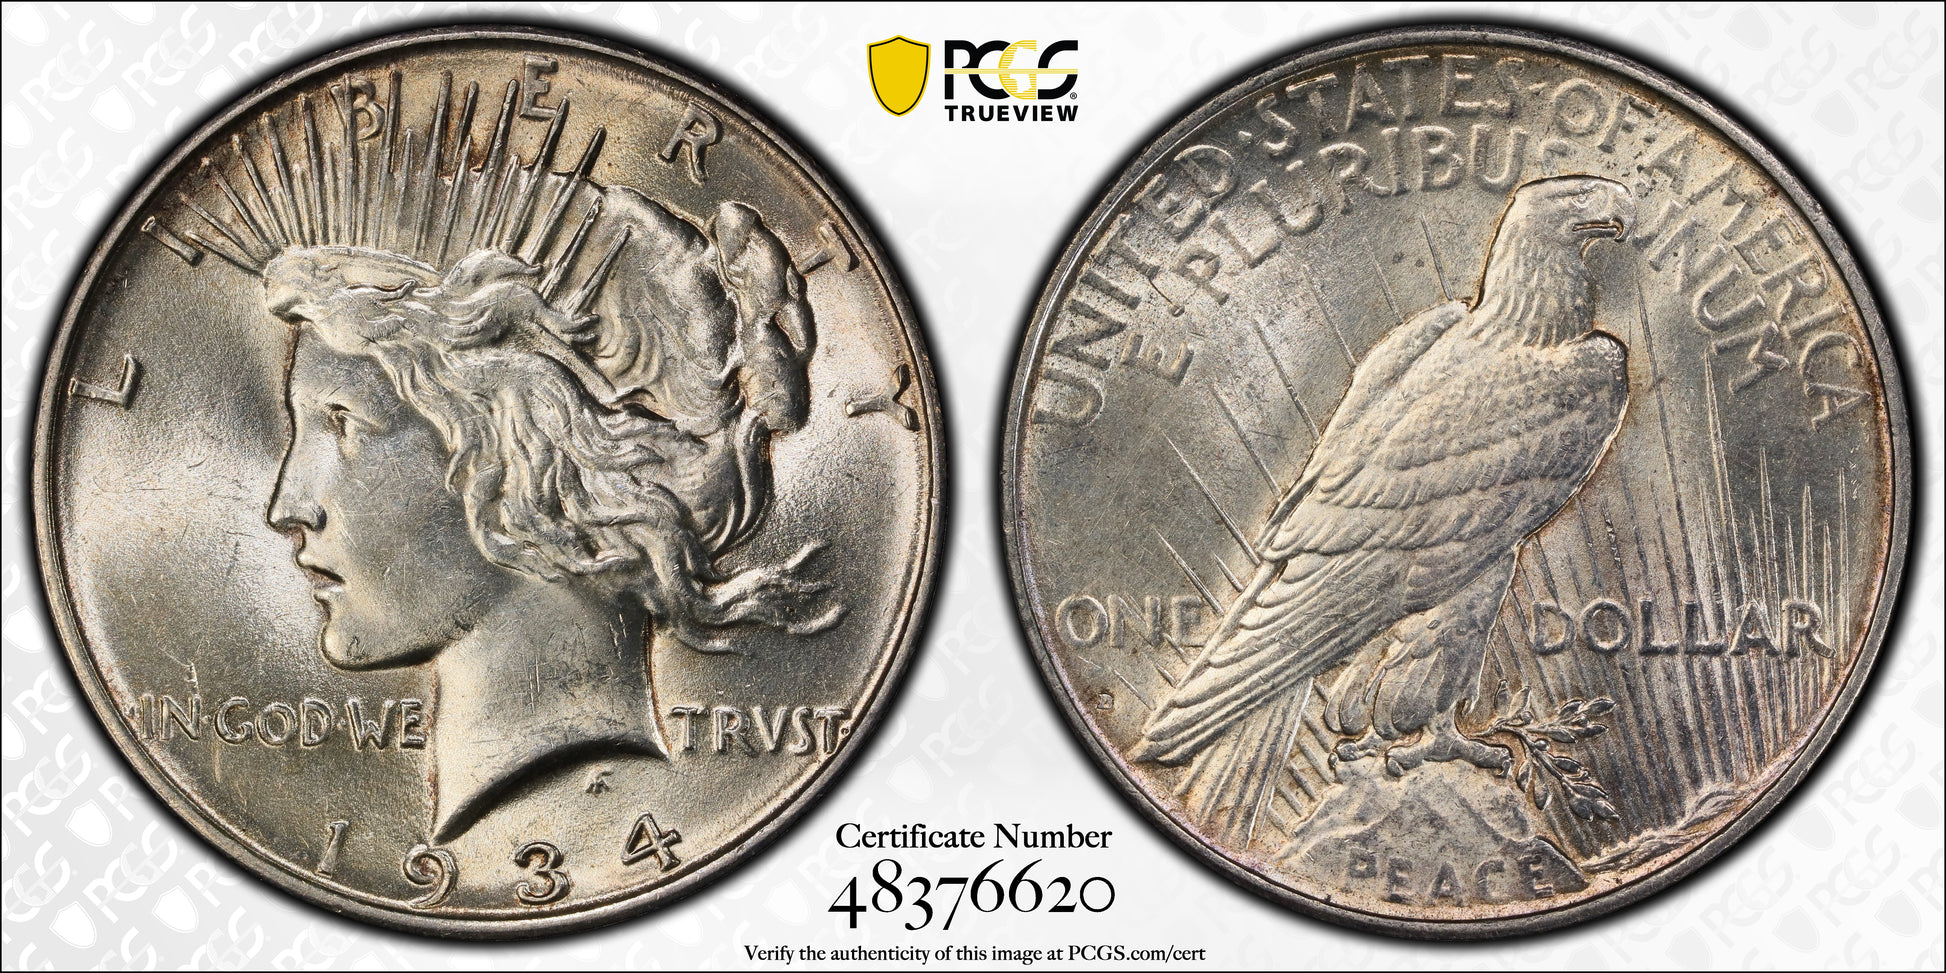 1934-D Peace Dollar $1 PCGS MS62 Trueview